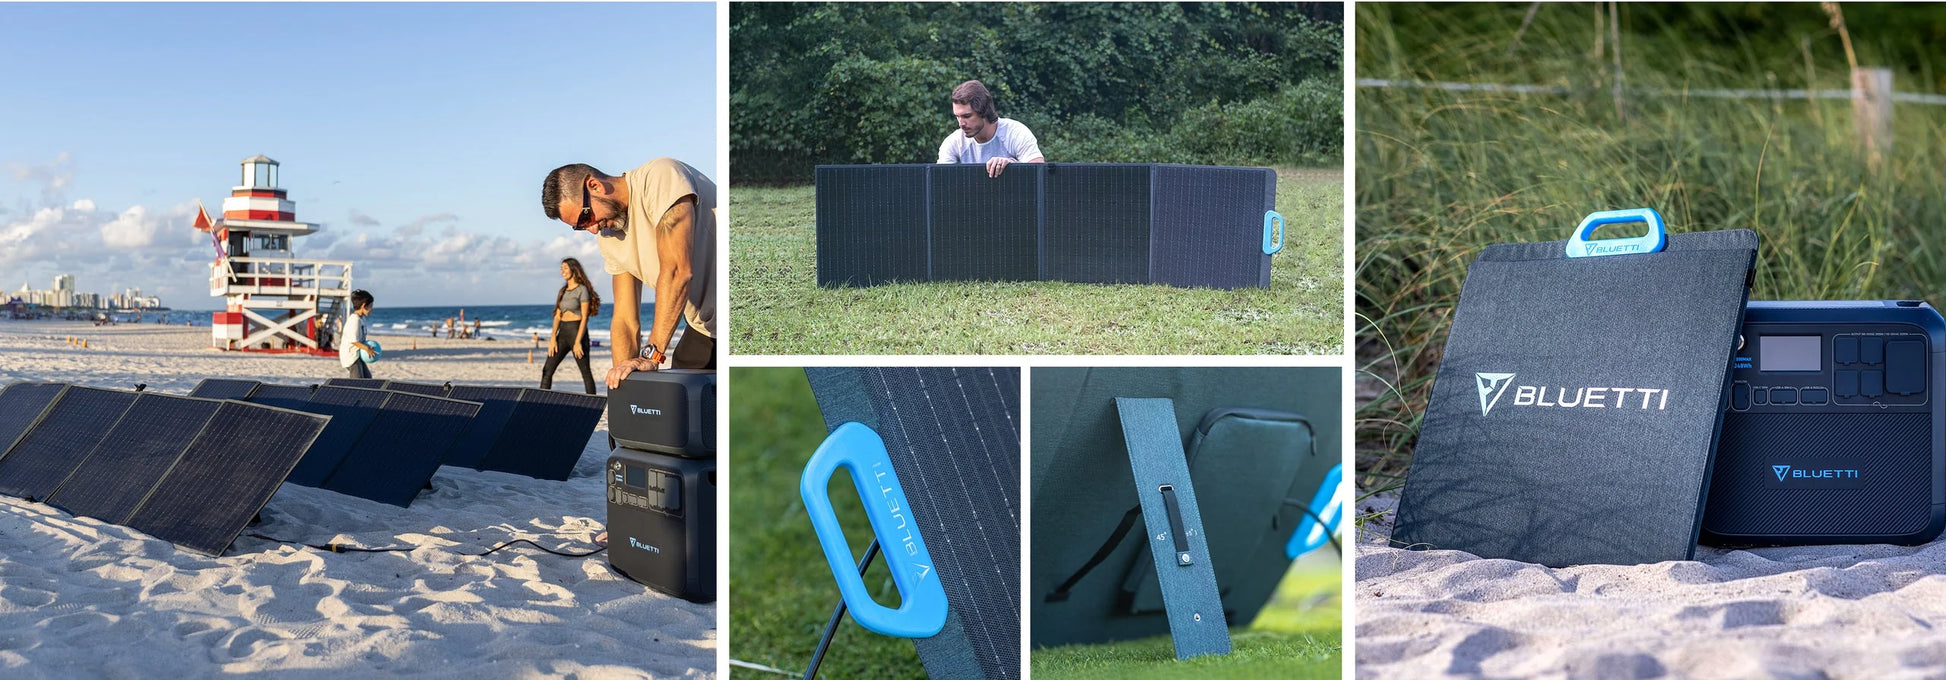 Bluetti EB70 portable solar power station – Virtue Solaris